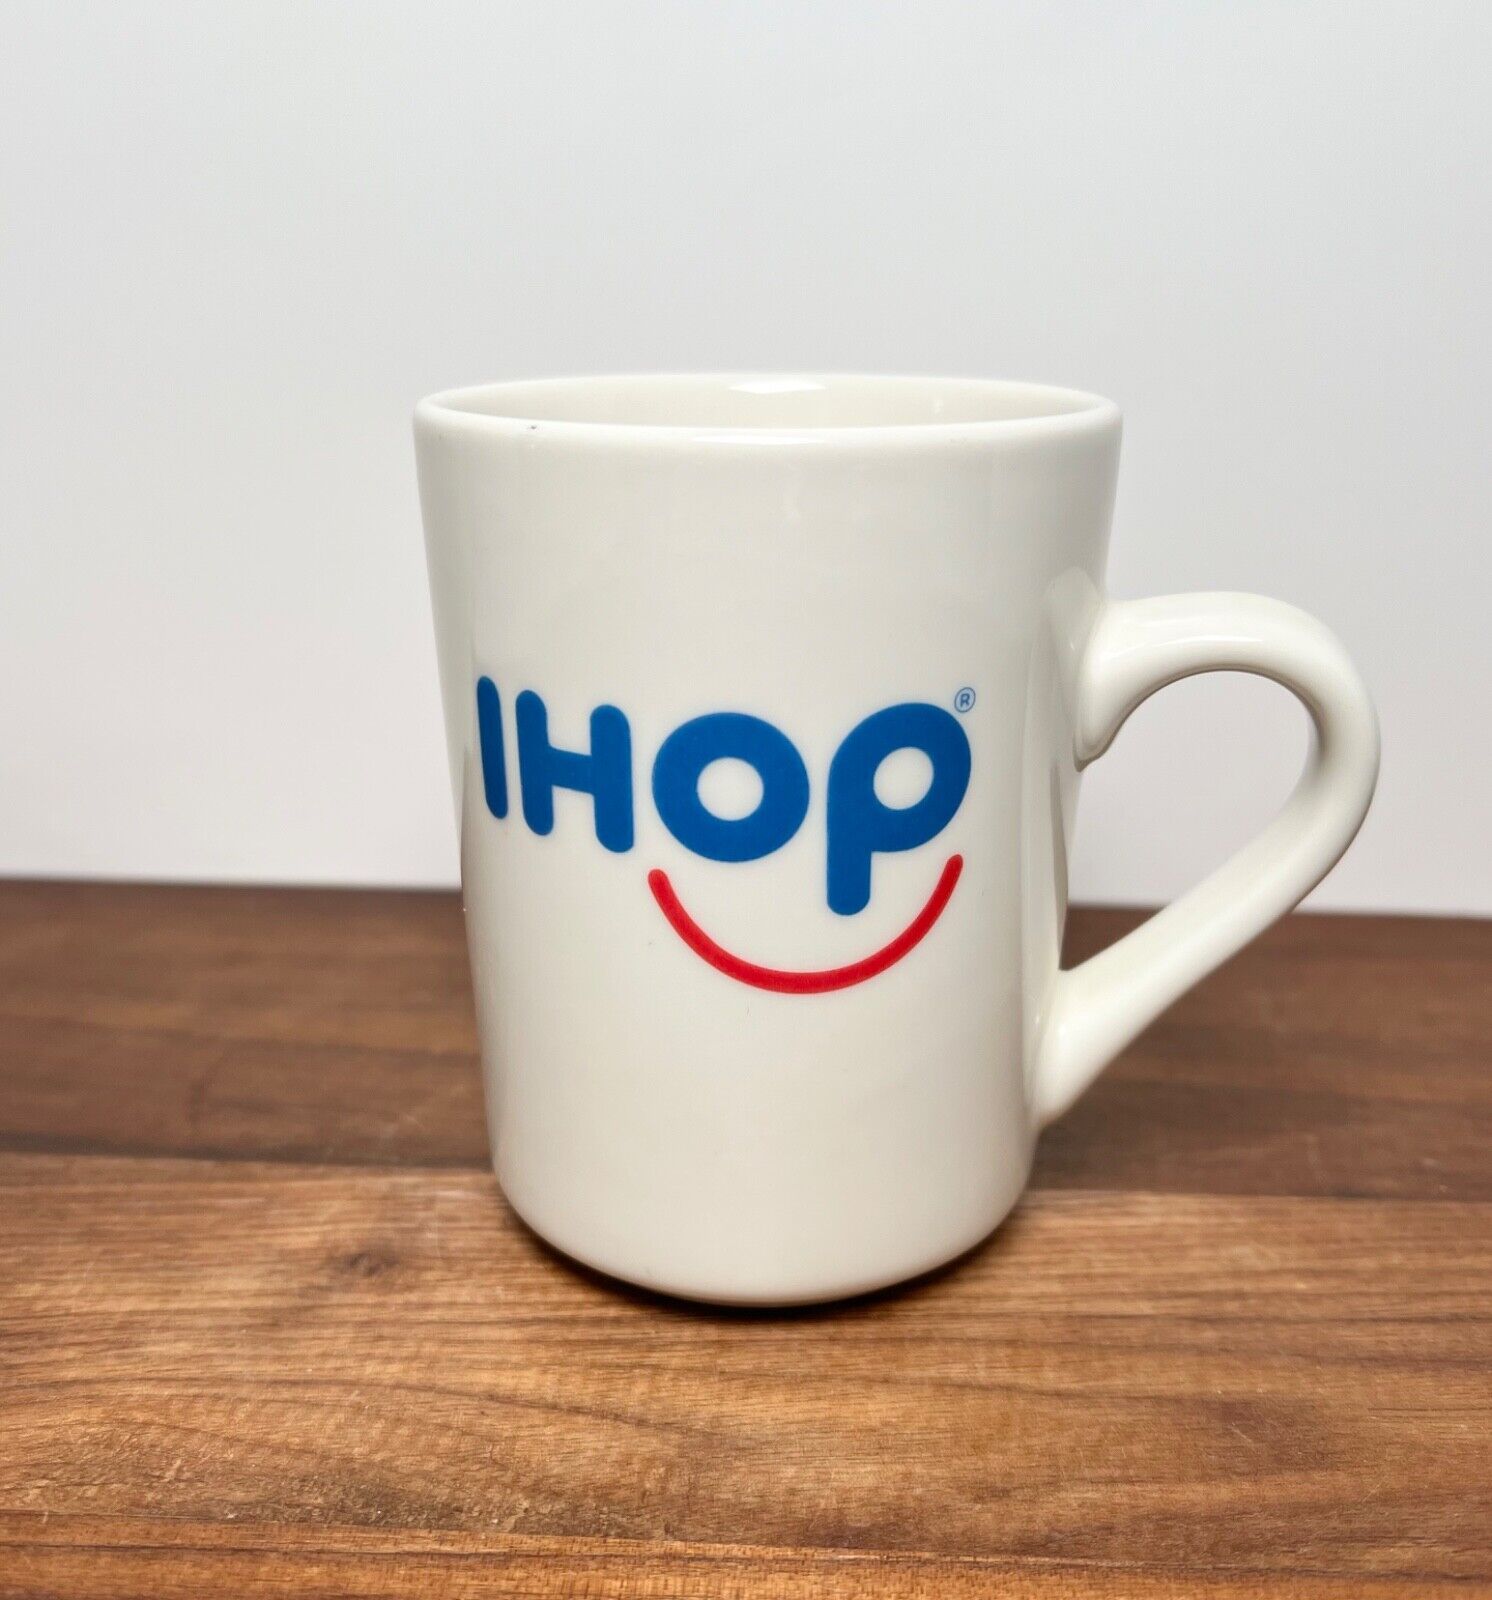 IHOP Restaurant Coffee Mug Red Smiley Face Blue Letters Ceramic Tuxton 8 oz